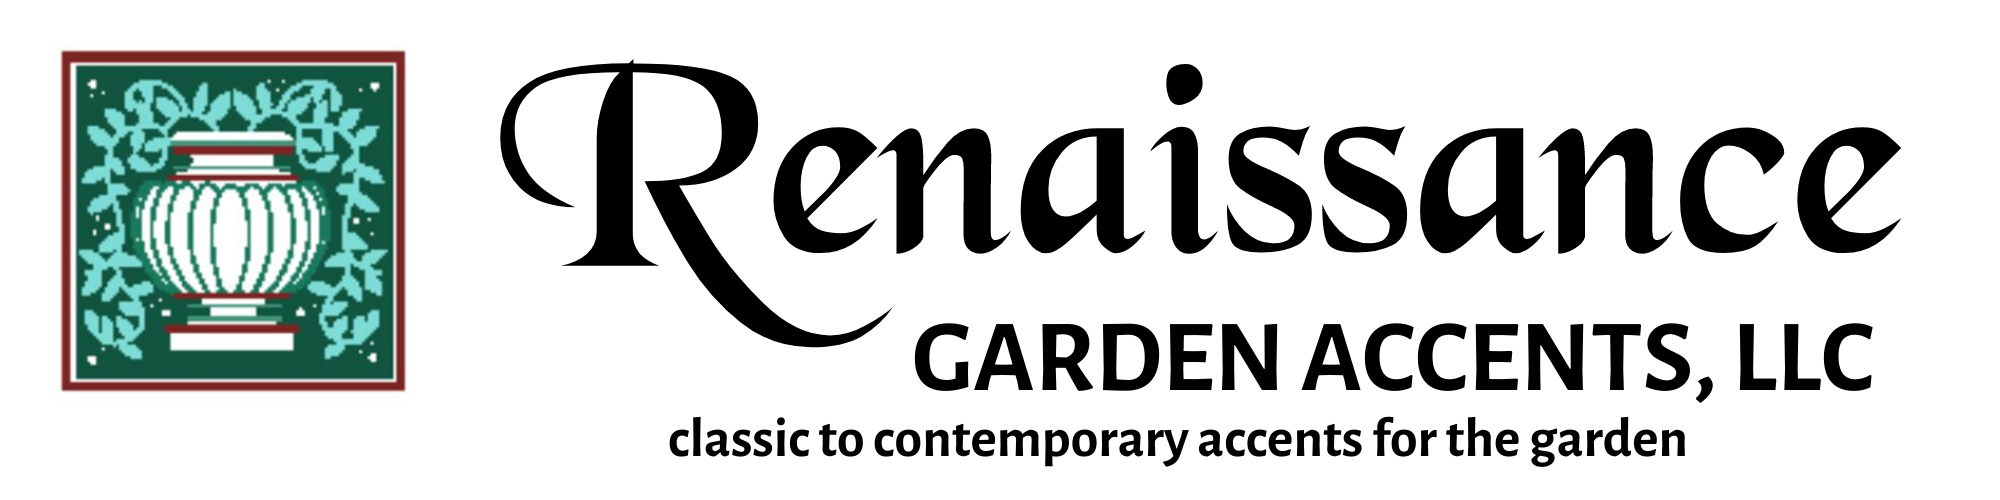 Renaissance Garden Accents